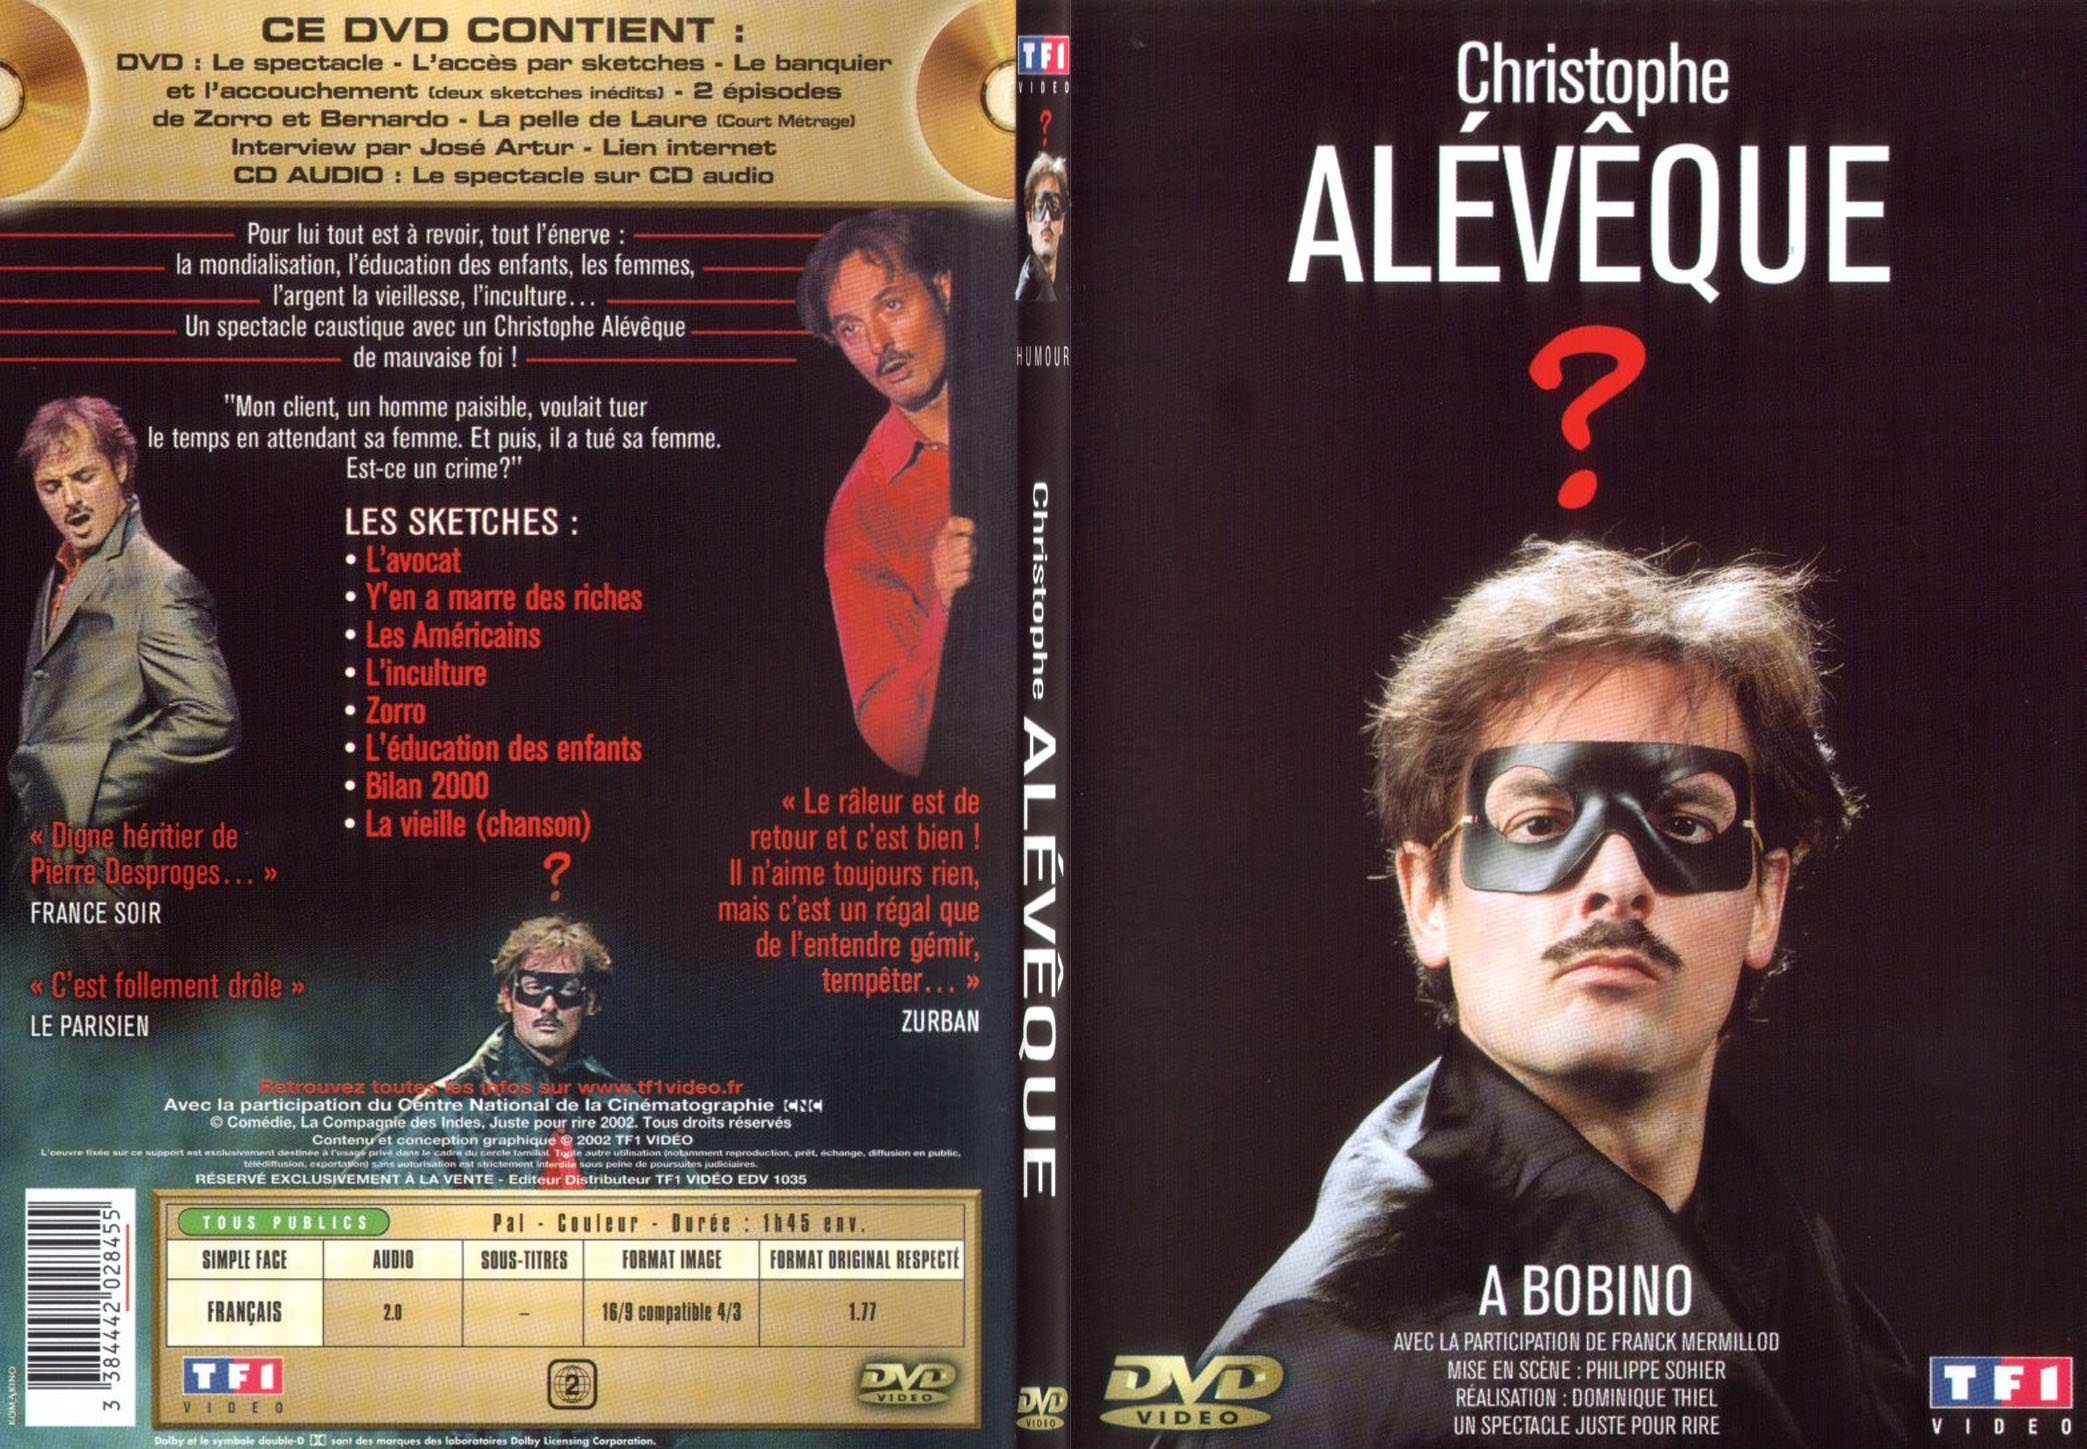 Jaquette DVD Christophe Alvque  bobino - SLIM